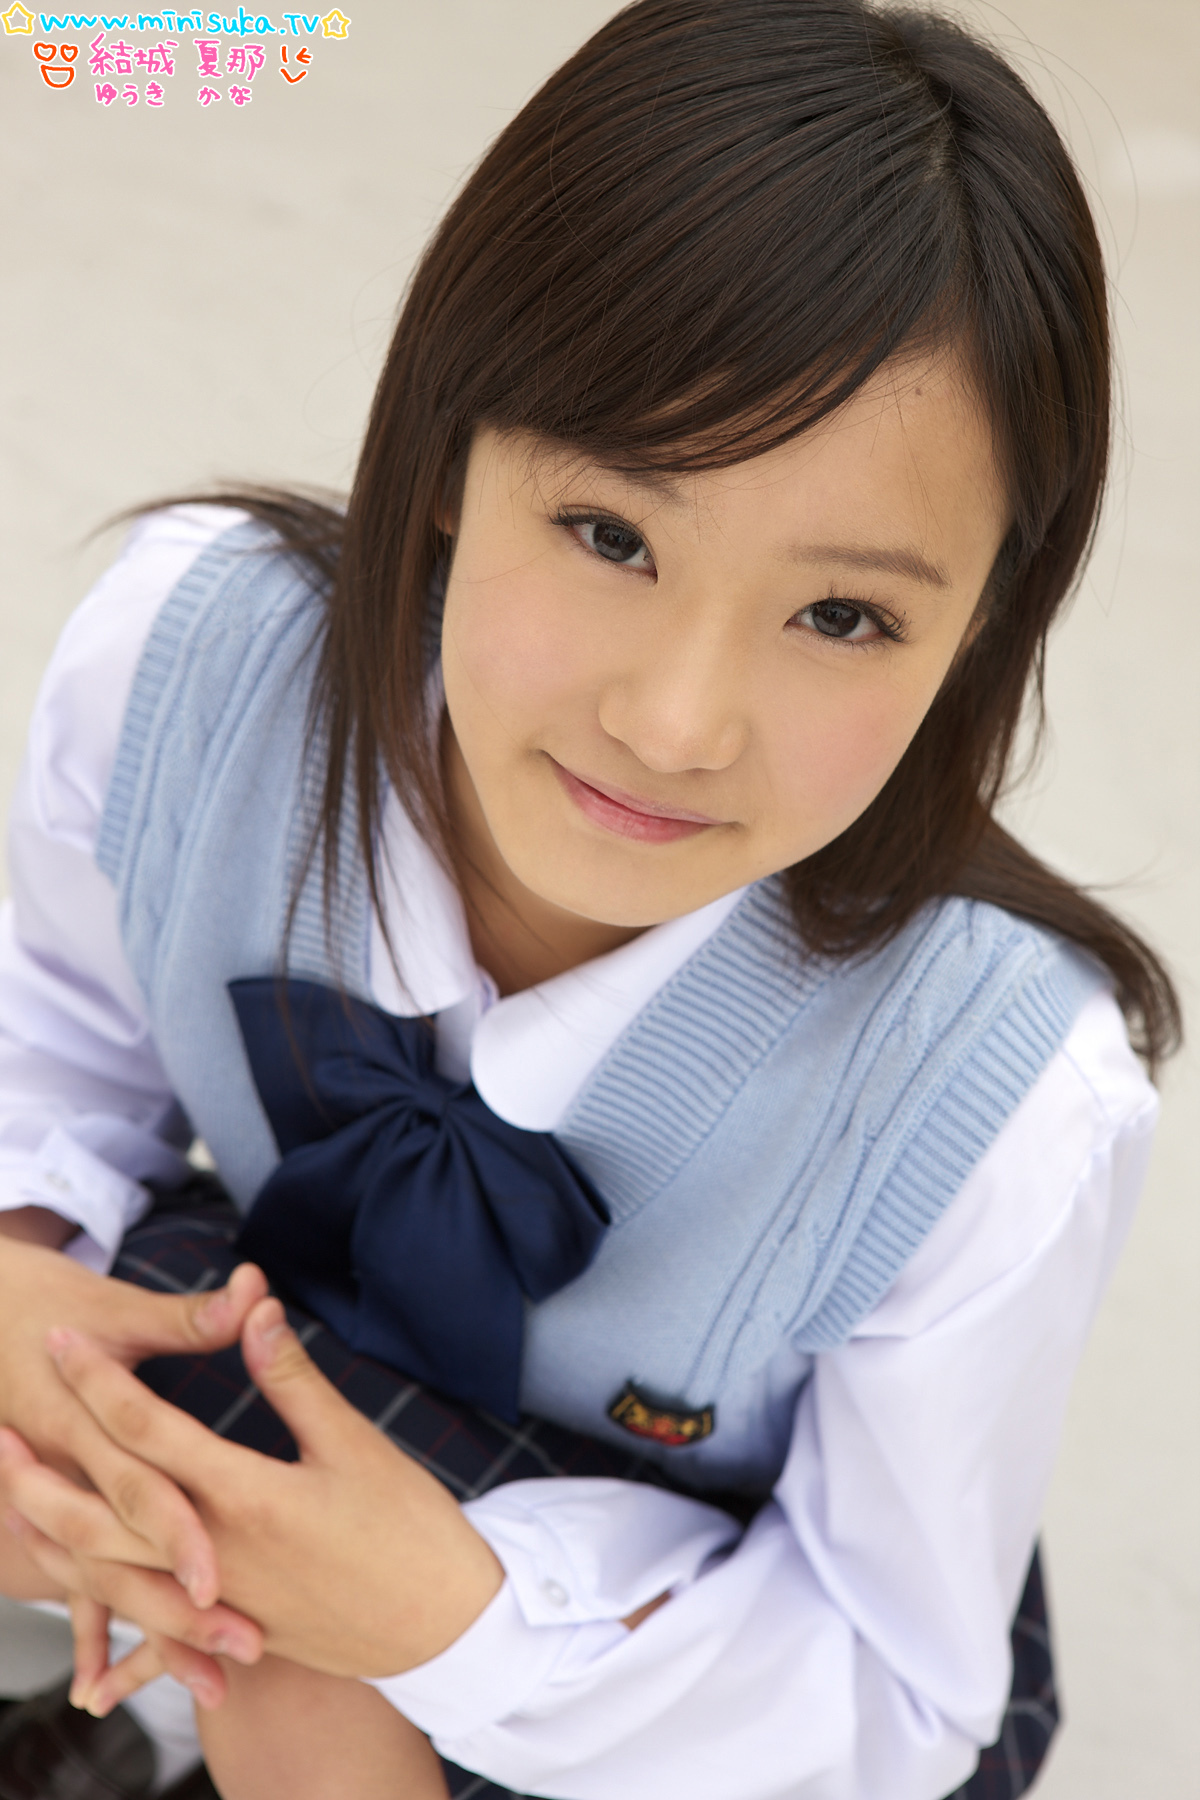 Students' uniform tempts Xana[ Minisuka.tv ]Female high school students in active service